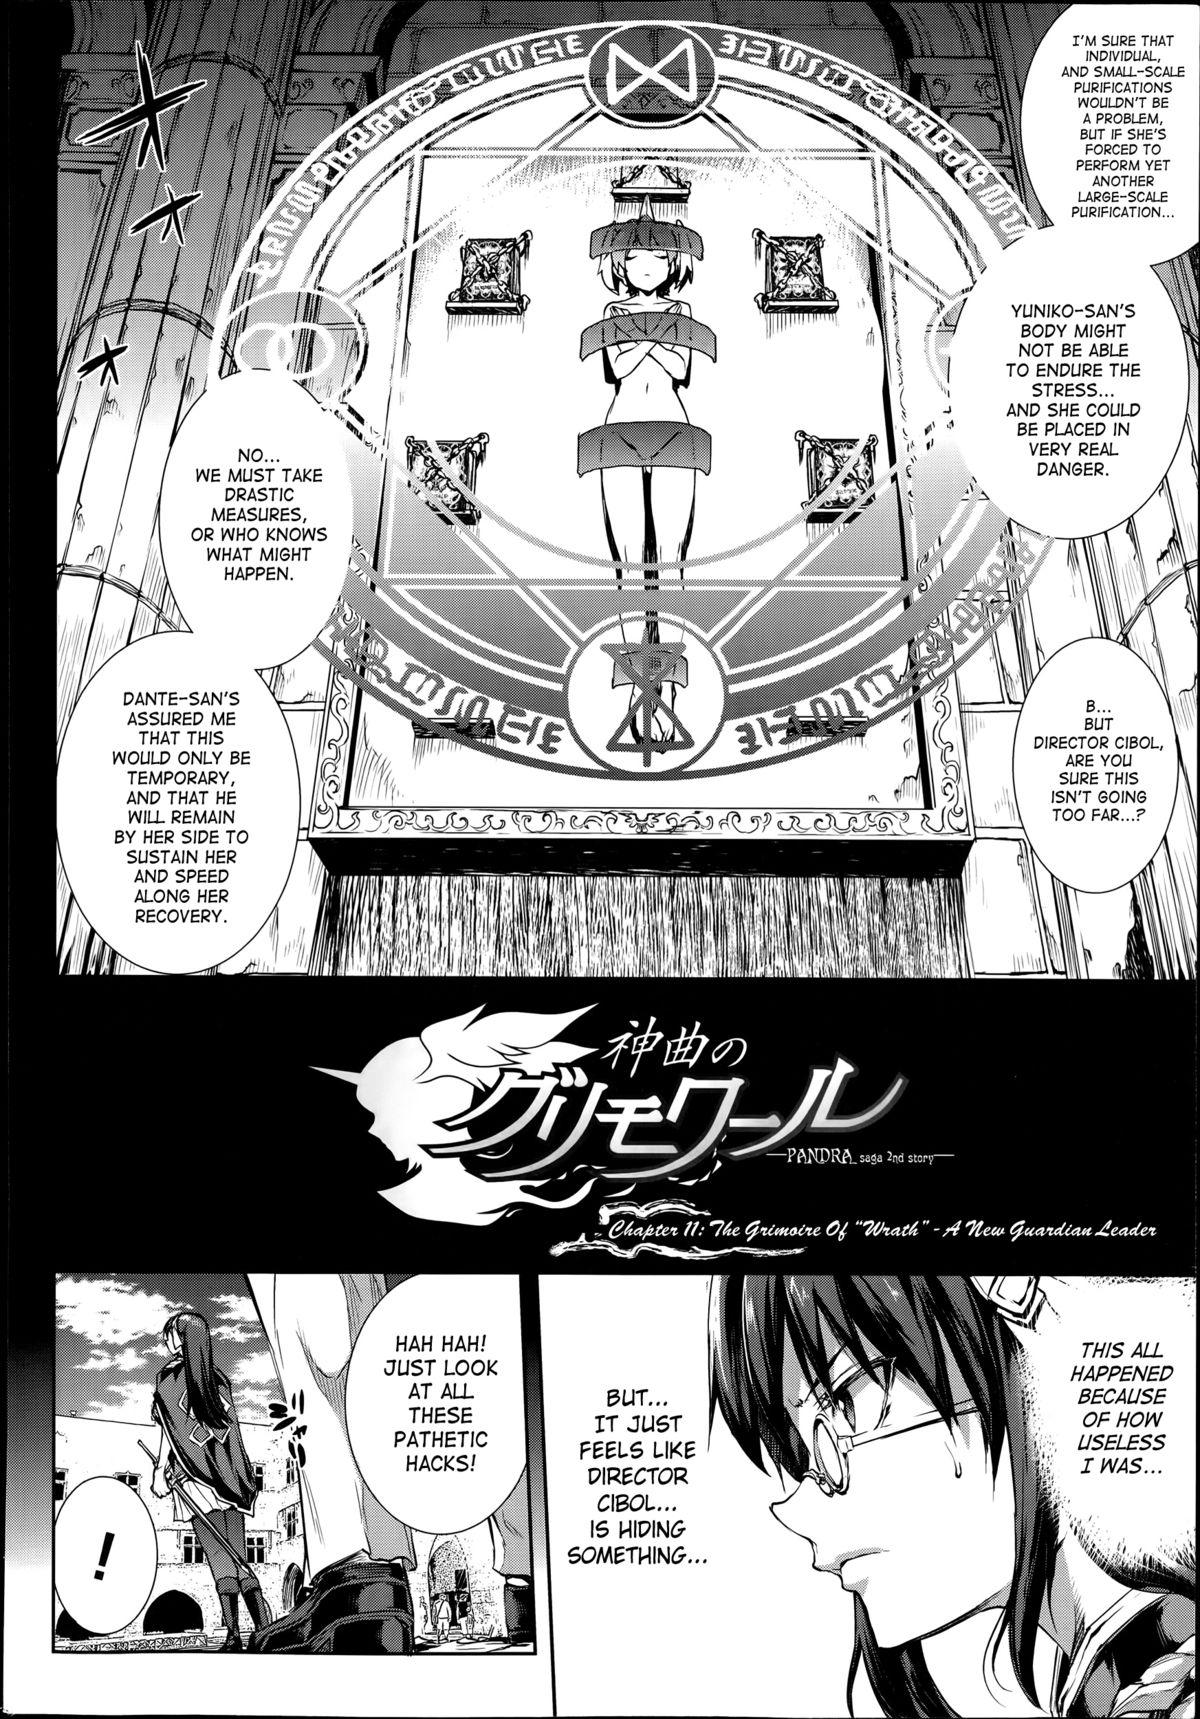 [Erect Sawaru] Shinkyoku no Grimoire -PANDRA saga 2nd story- Ch. 1-16 + Side Story x 3 [English] [SaHa] 332